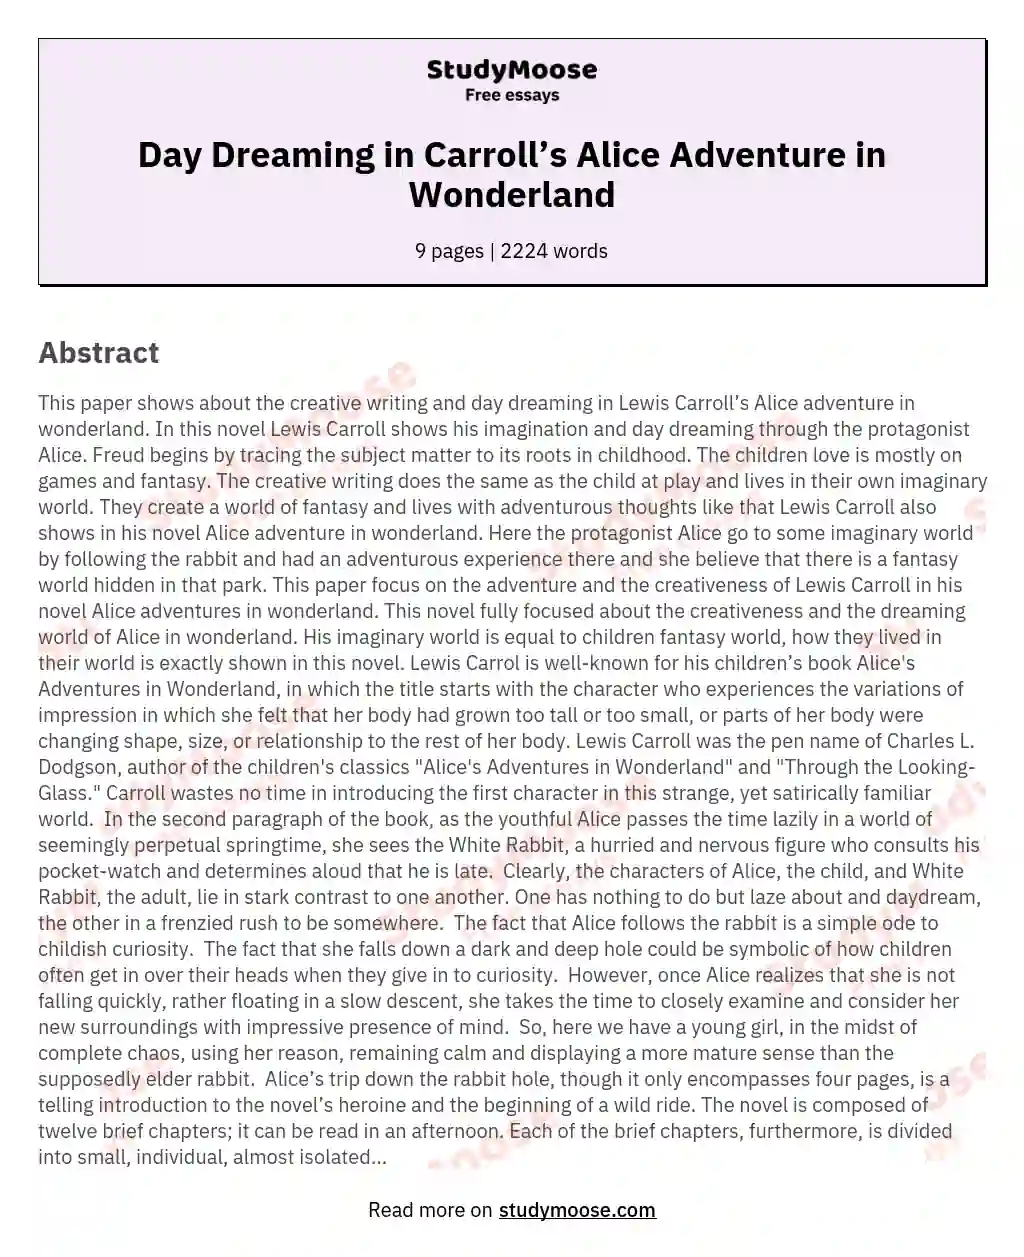 Day Dreaming in Carroll’s Alice Adventure in Wonderland